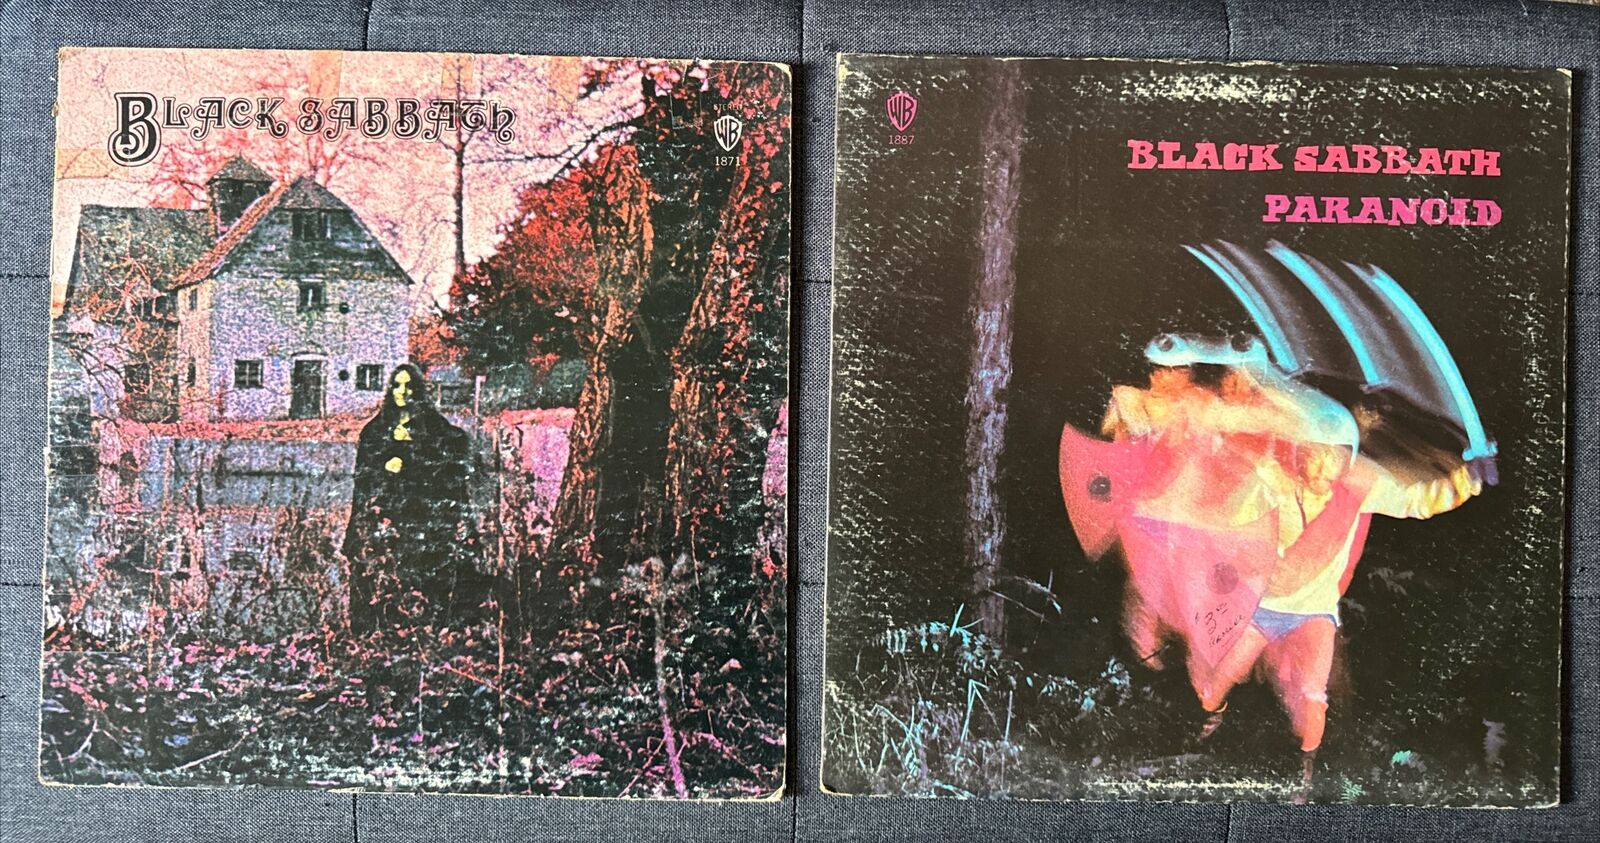 Black Sabbath - Black Sabbath & Paranoid vinyl 1970 Green Labels - Warner Bros